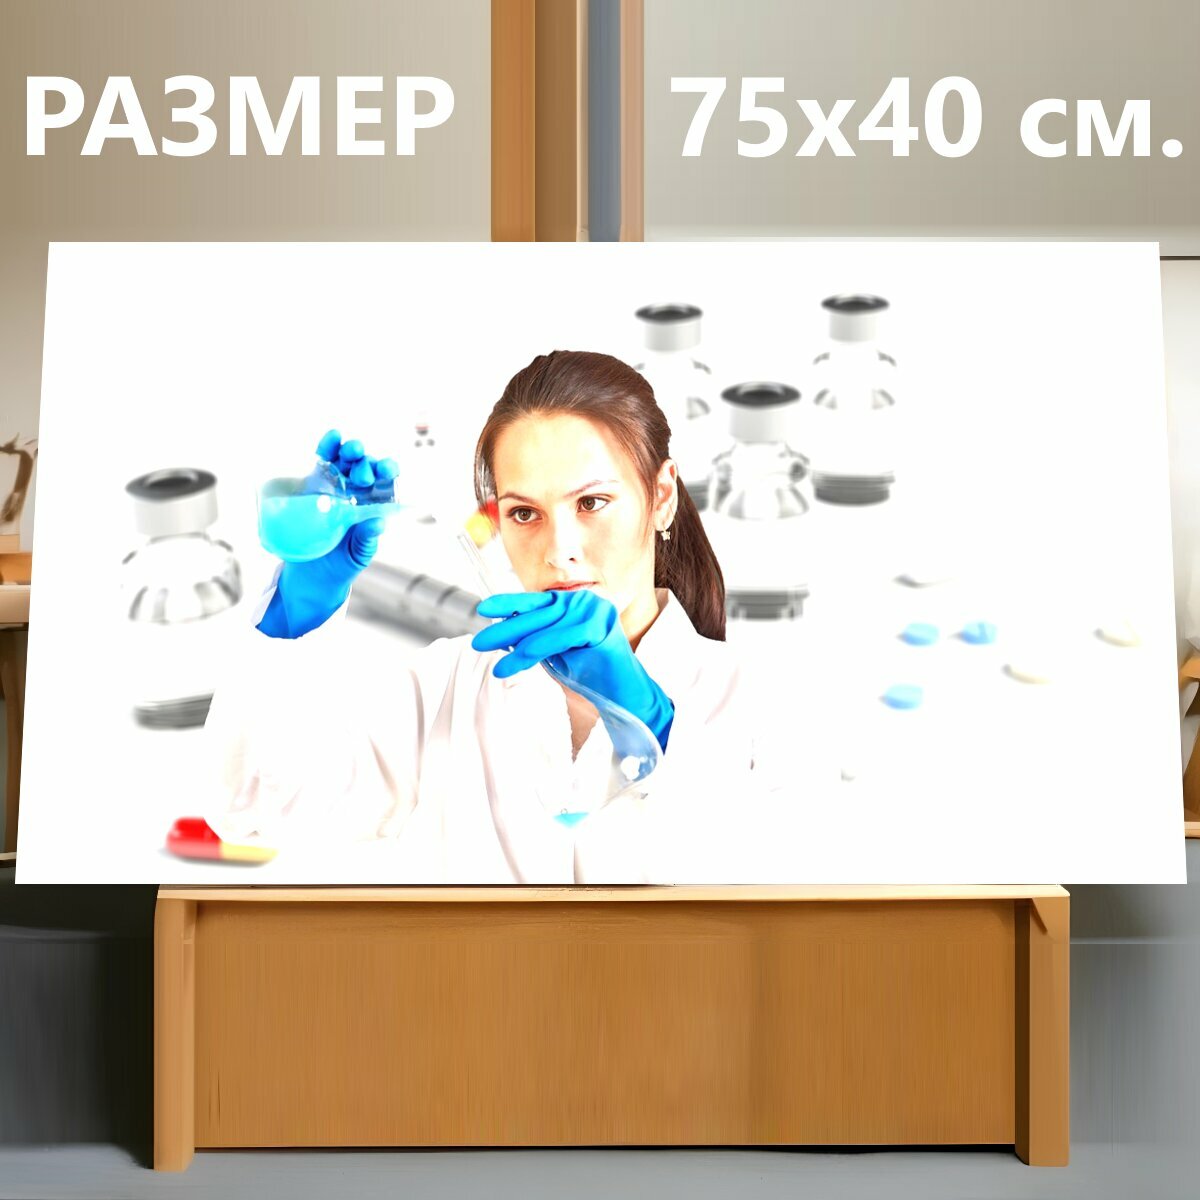 Картина на холсте "Вакцина, химик, инъекция" на подрамнике 75х40 см. для интерьера